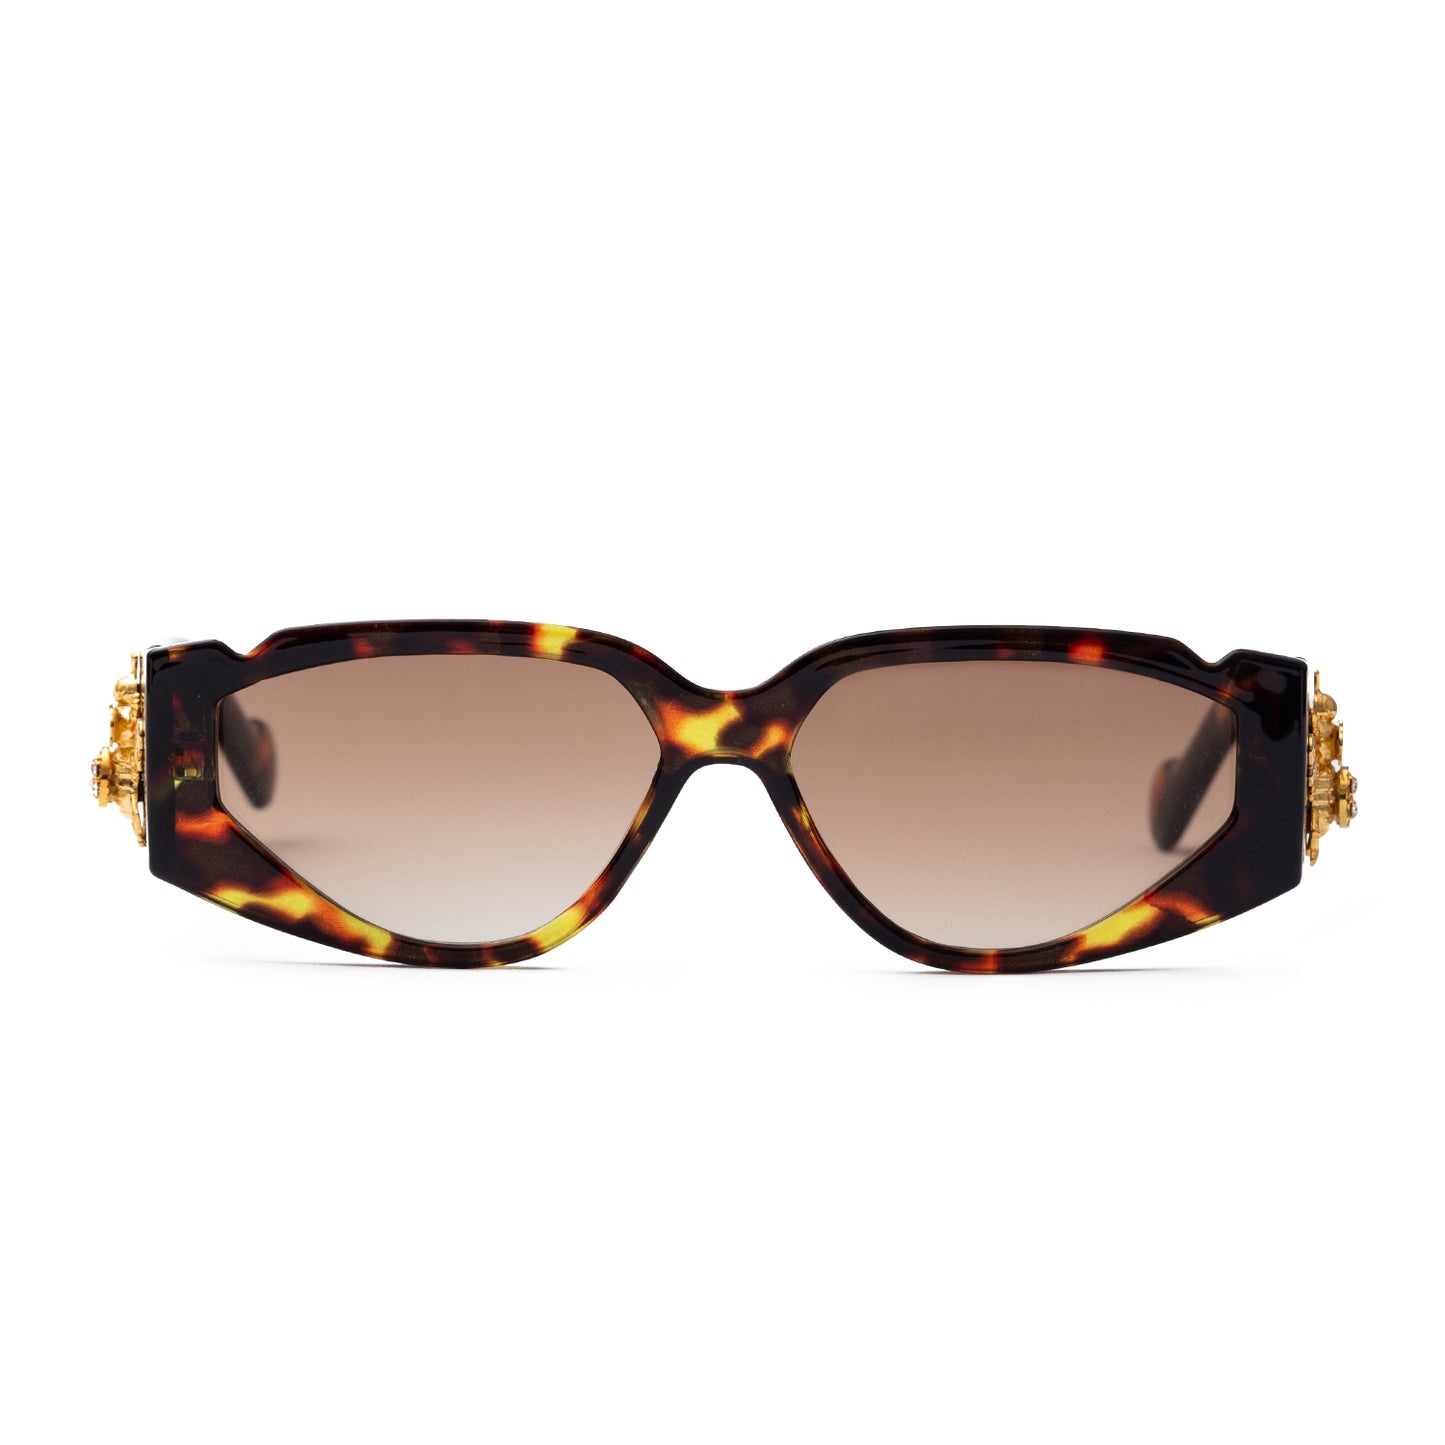 Nroda Gianni Love Bee  Eyewear Sunglasses Collection, Tnemnroda man- NRODA